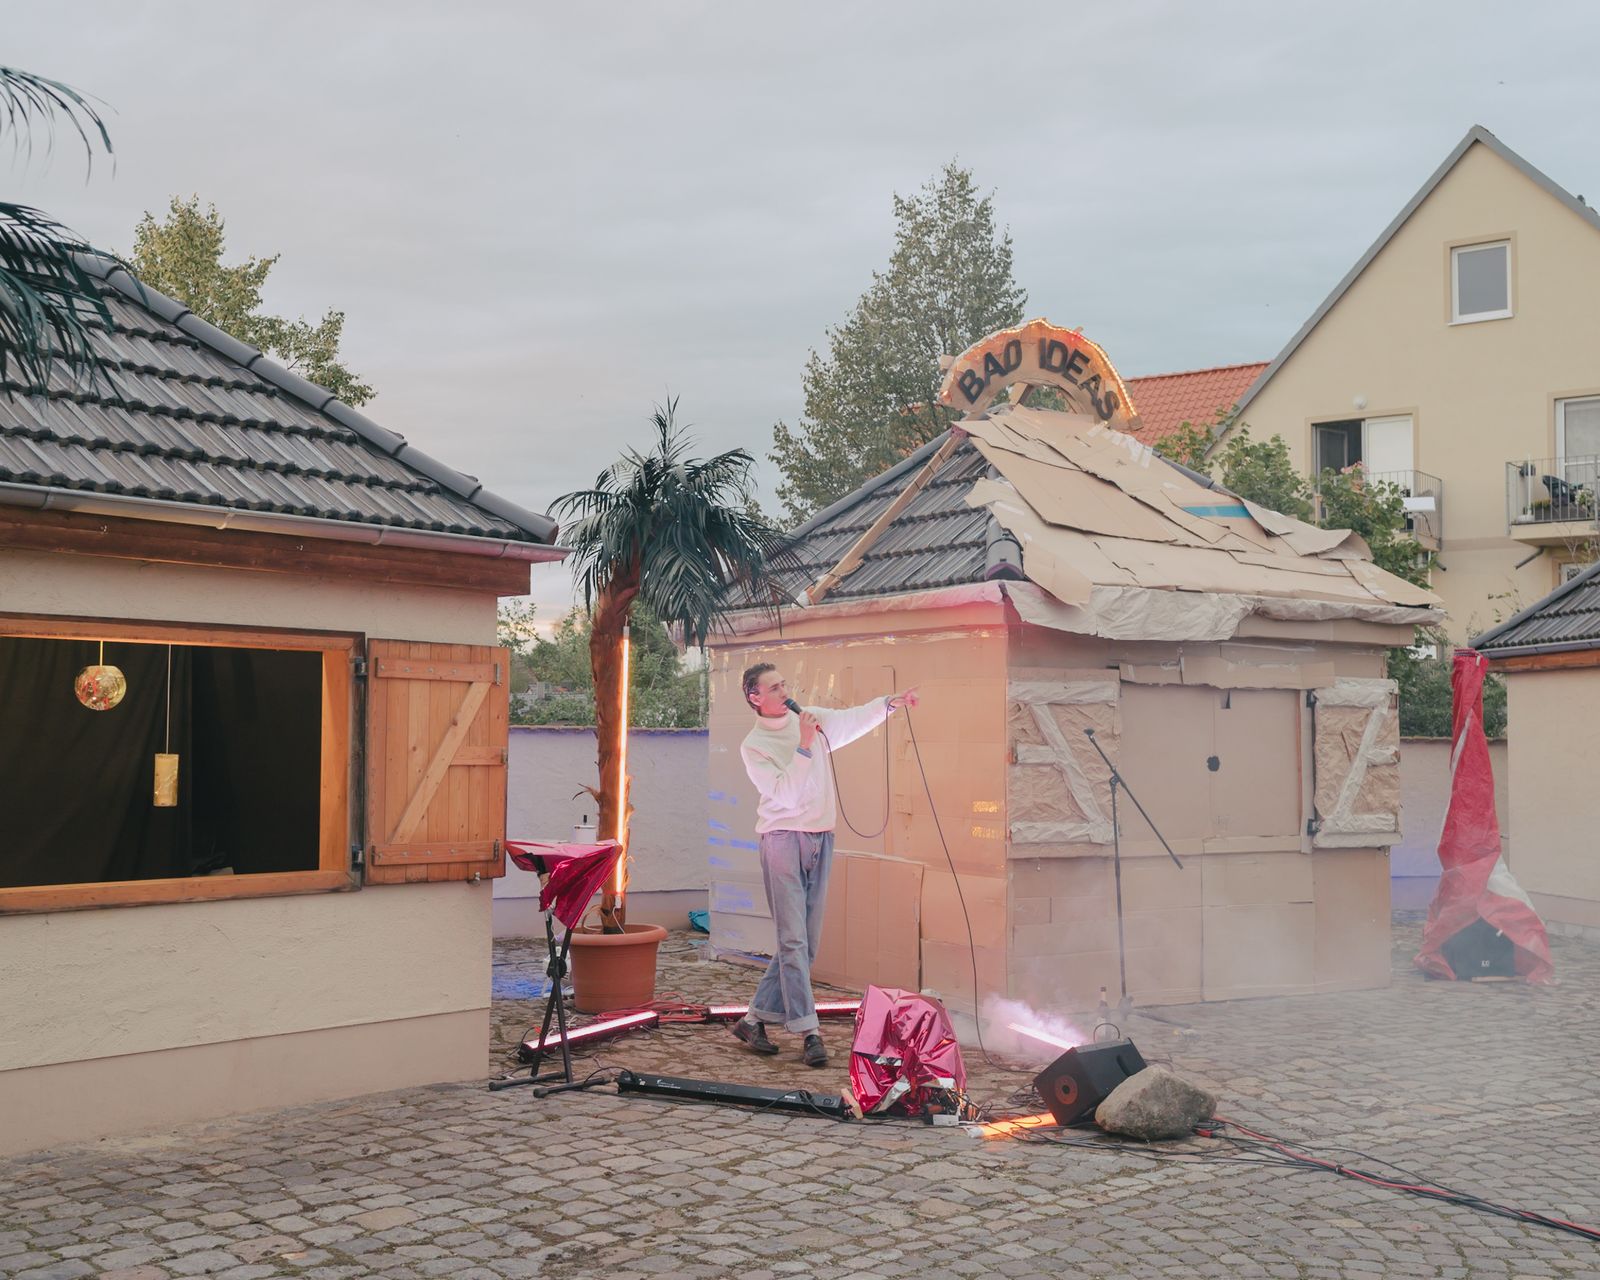 © Ingmar Björn Nolting - Performance of my friend Tim, village square, Thallwitz, September 5, 2020.